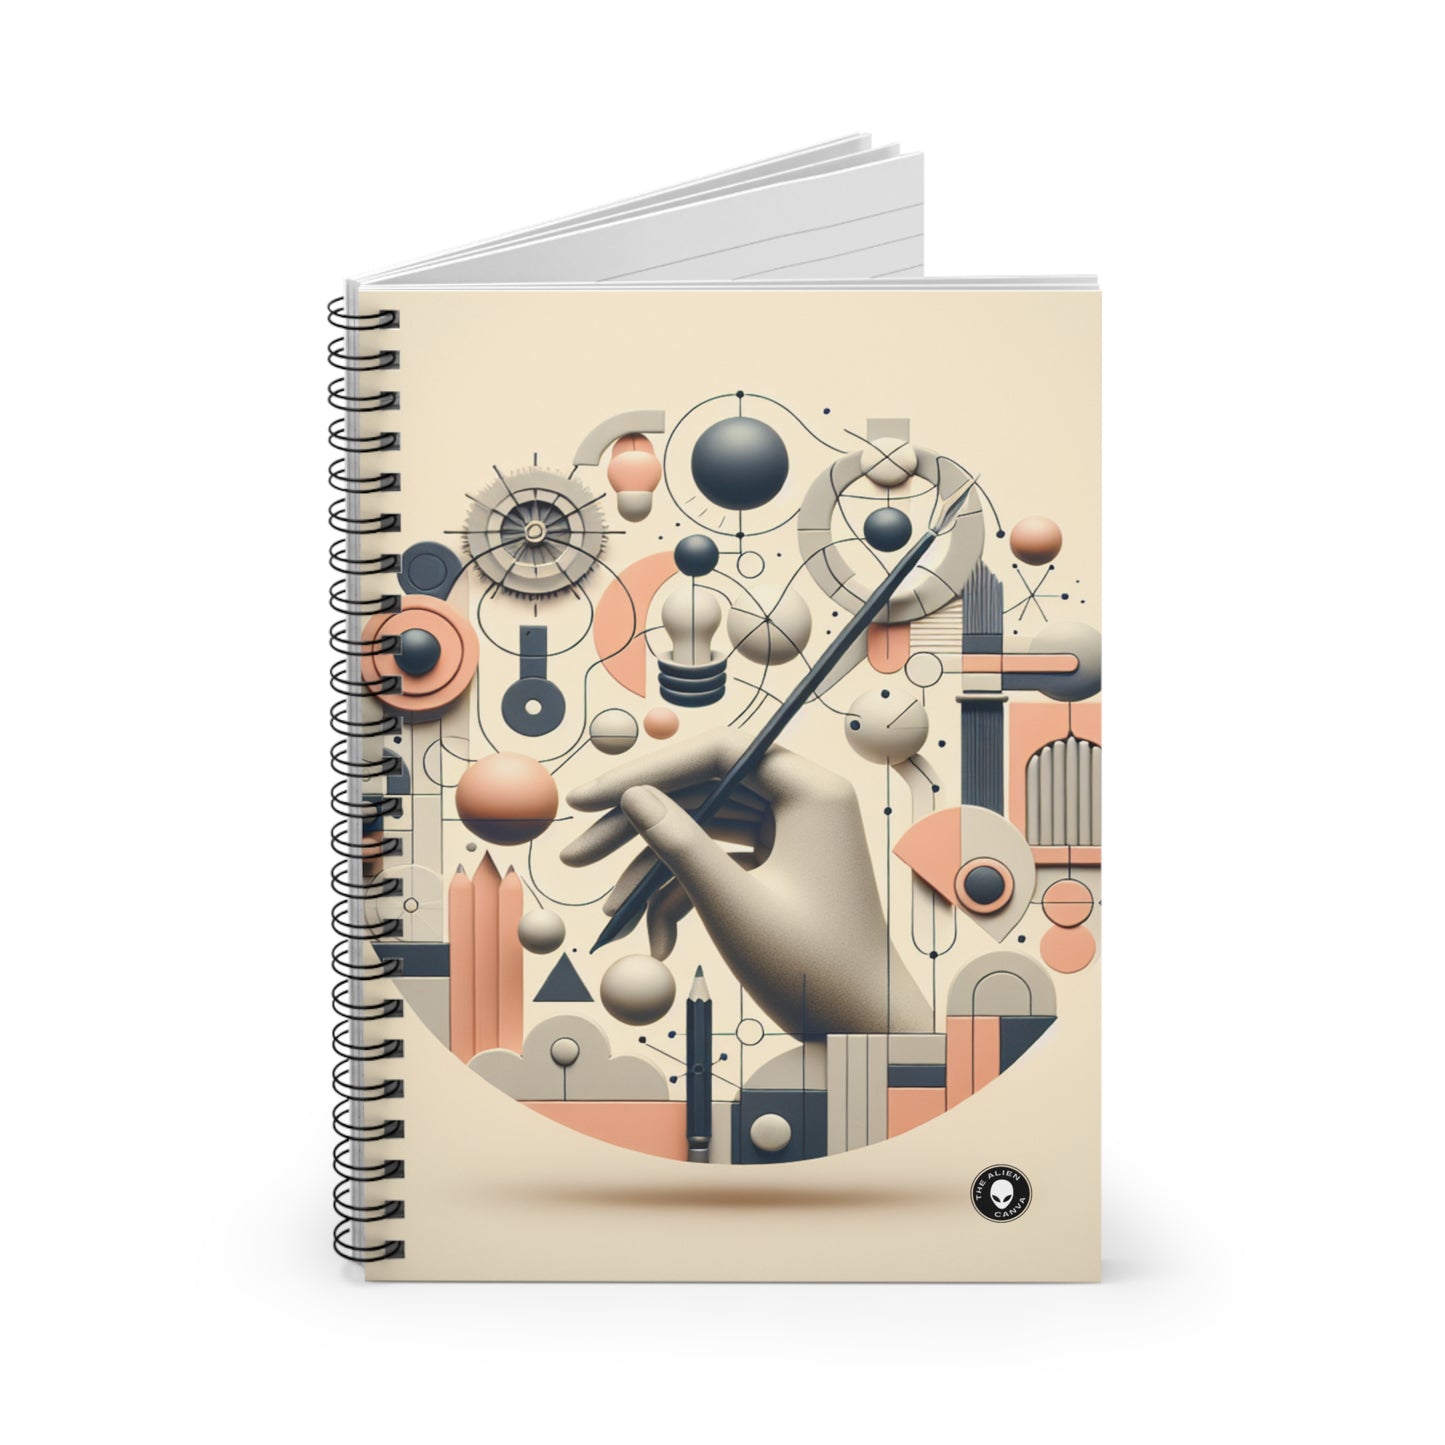 "Fusion Tech-Nature : Une exploration artistique" - The Alien Spiral Notebook (Ruled Line) Art conceptuel